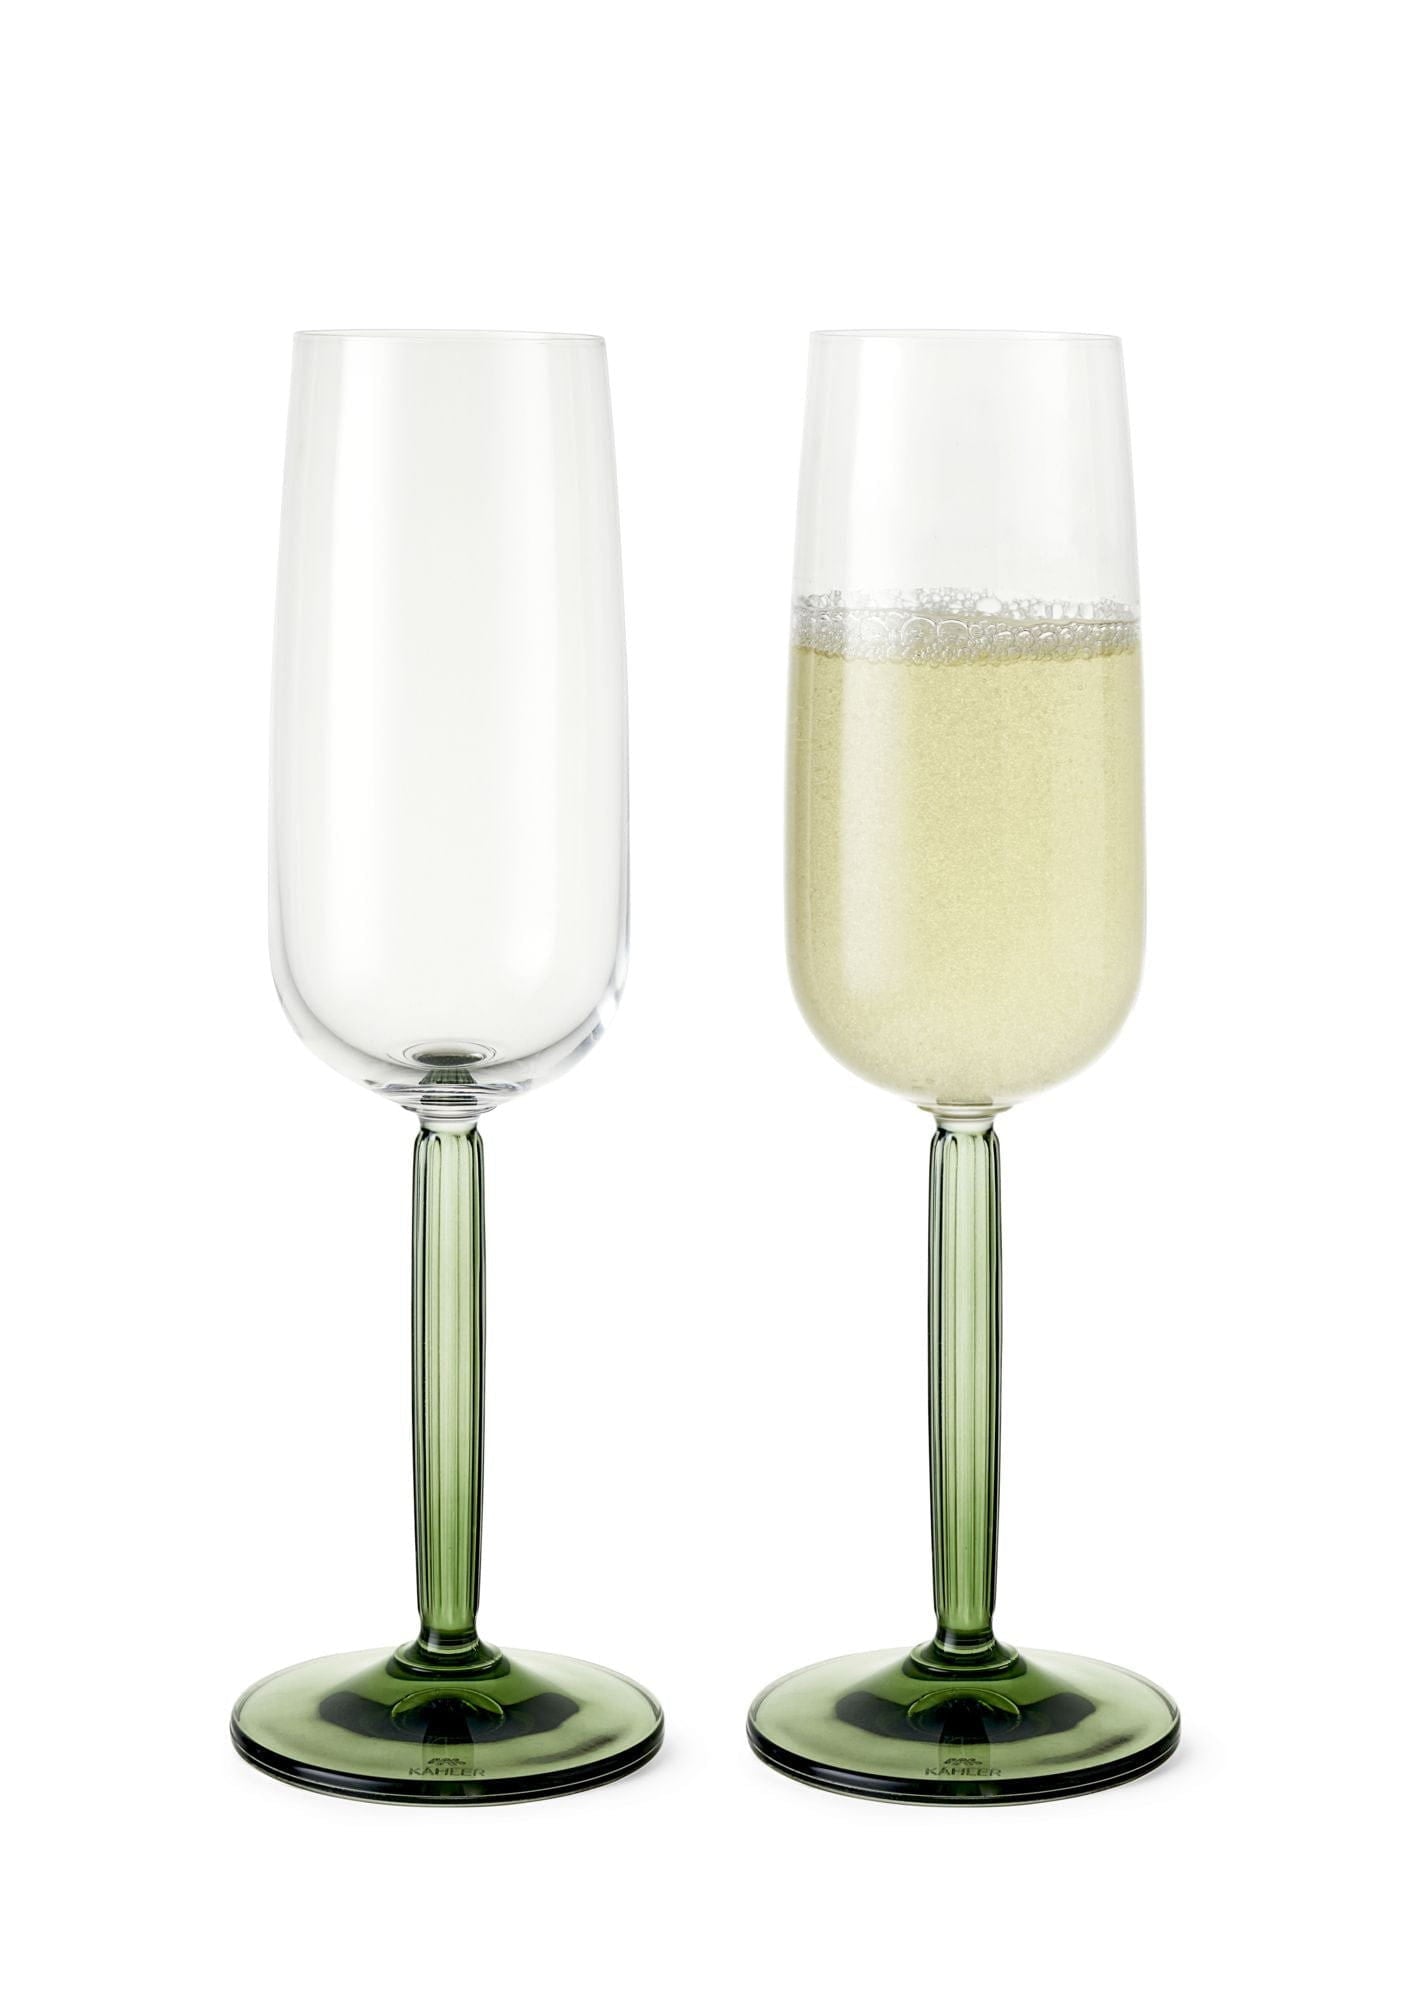 Kähler Hammershøi Champagnerglas Set von 240 ml, grün